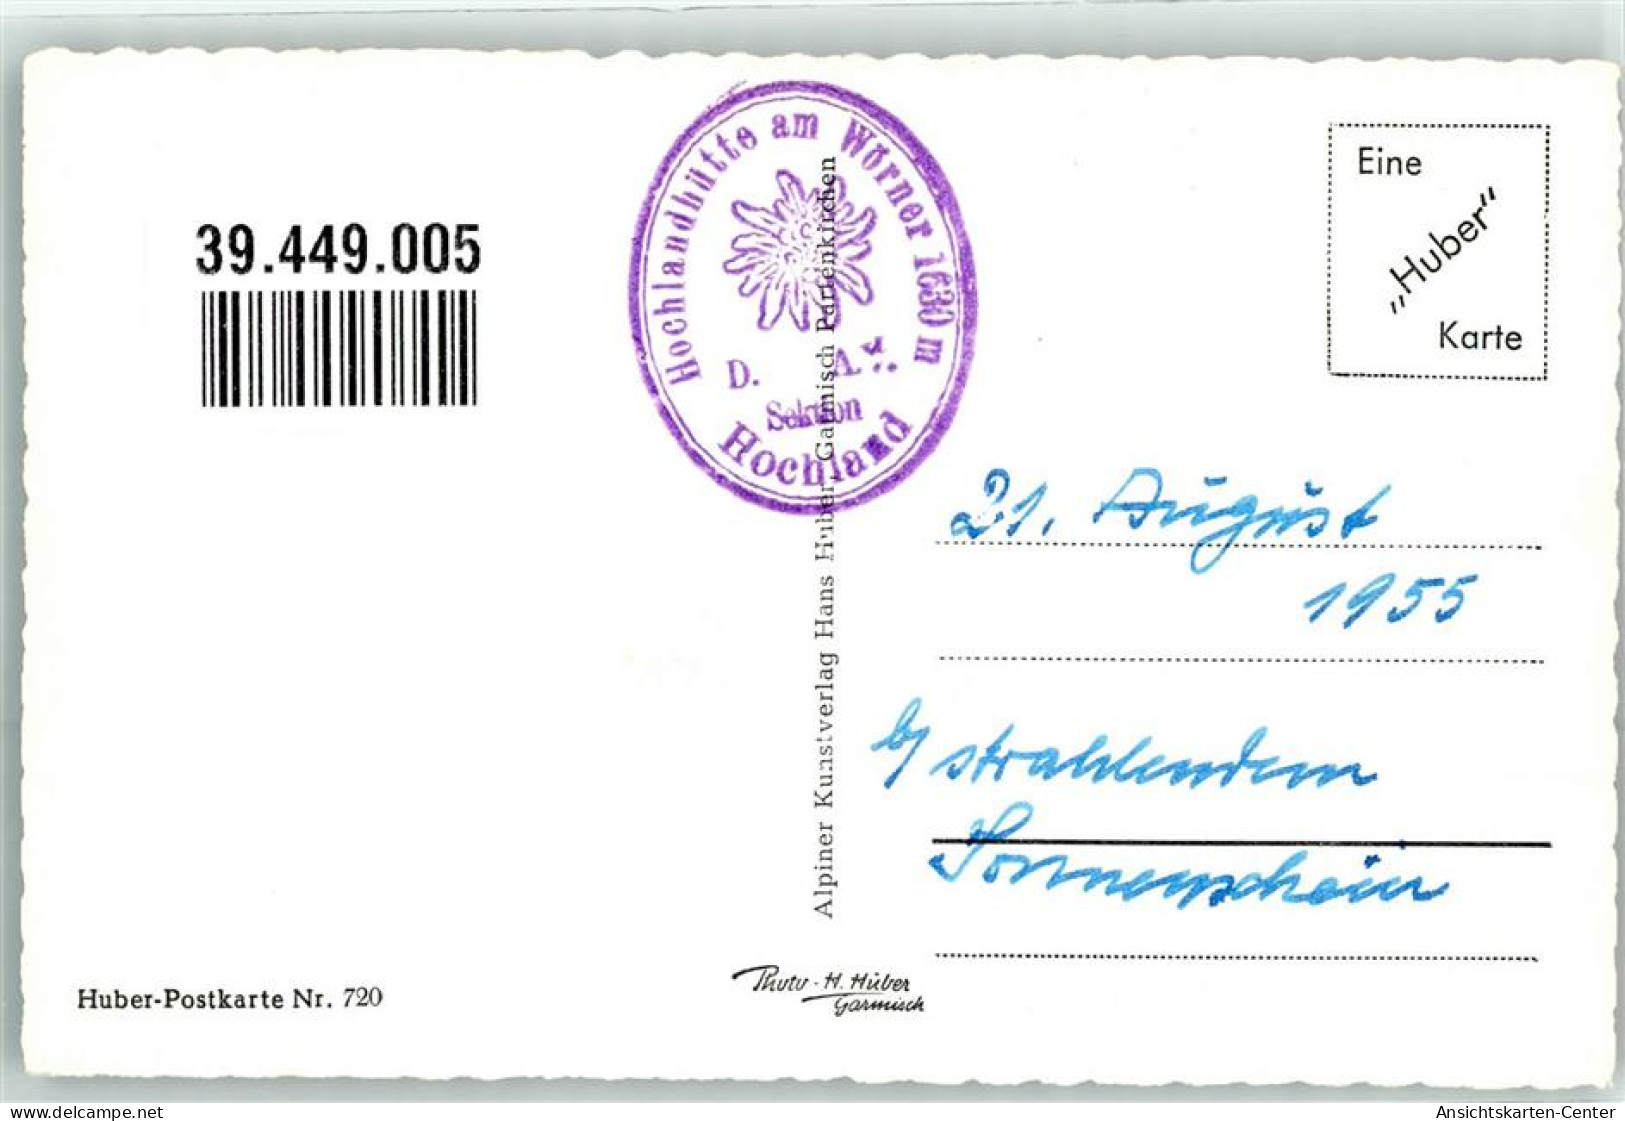 39449005 - Mittenwald - Mittenwald